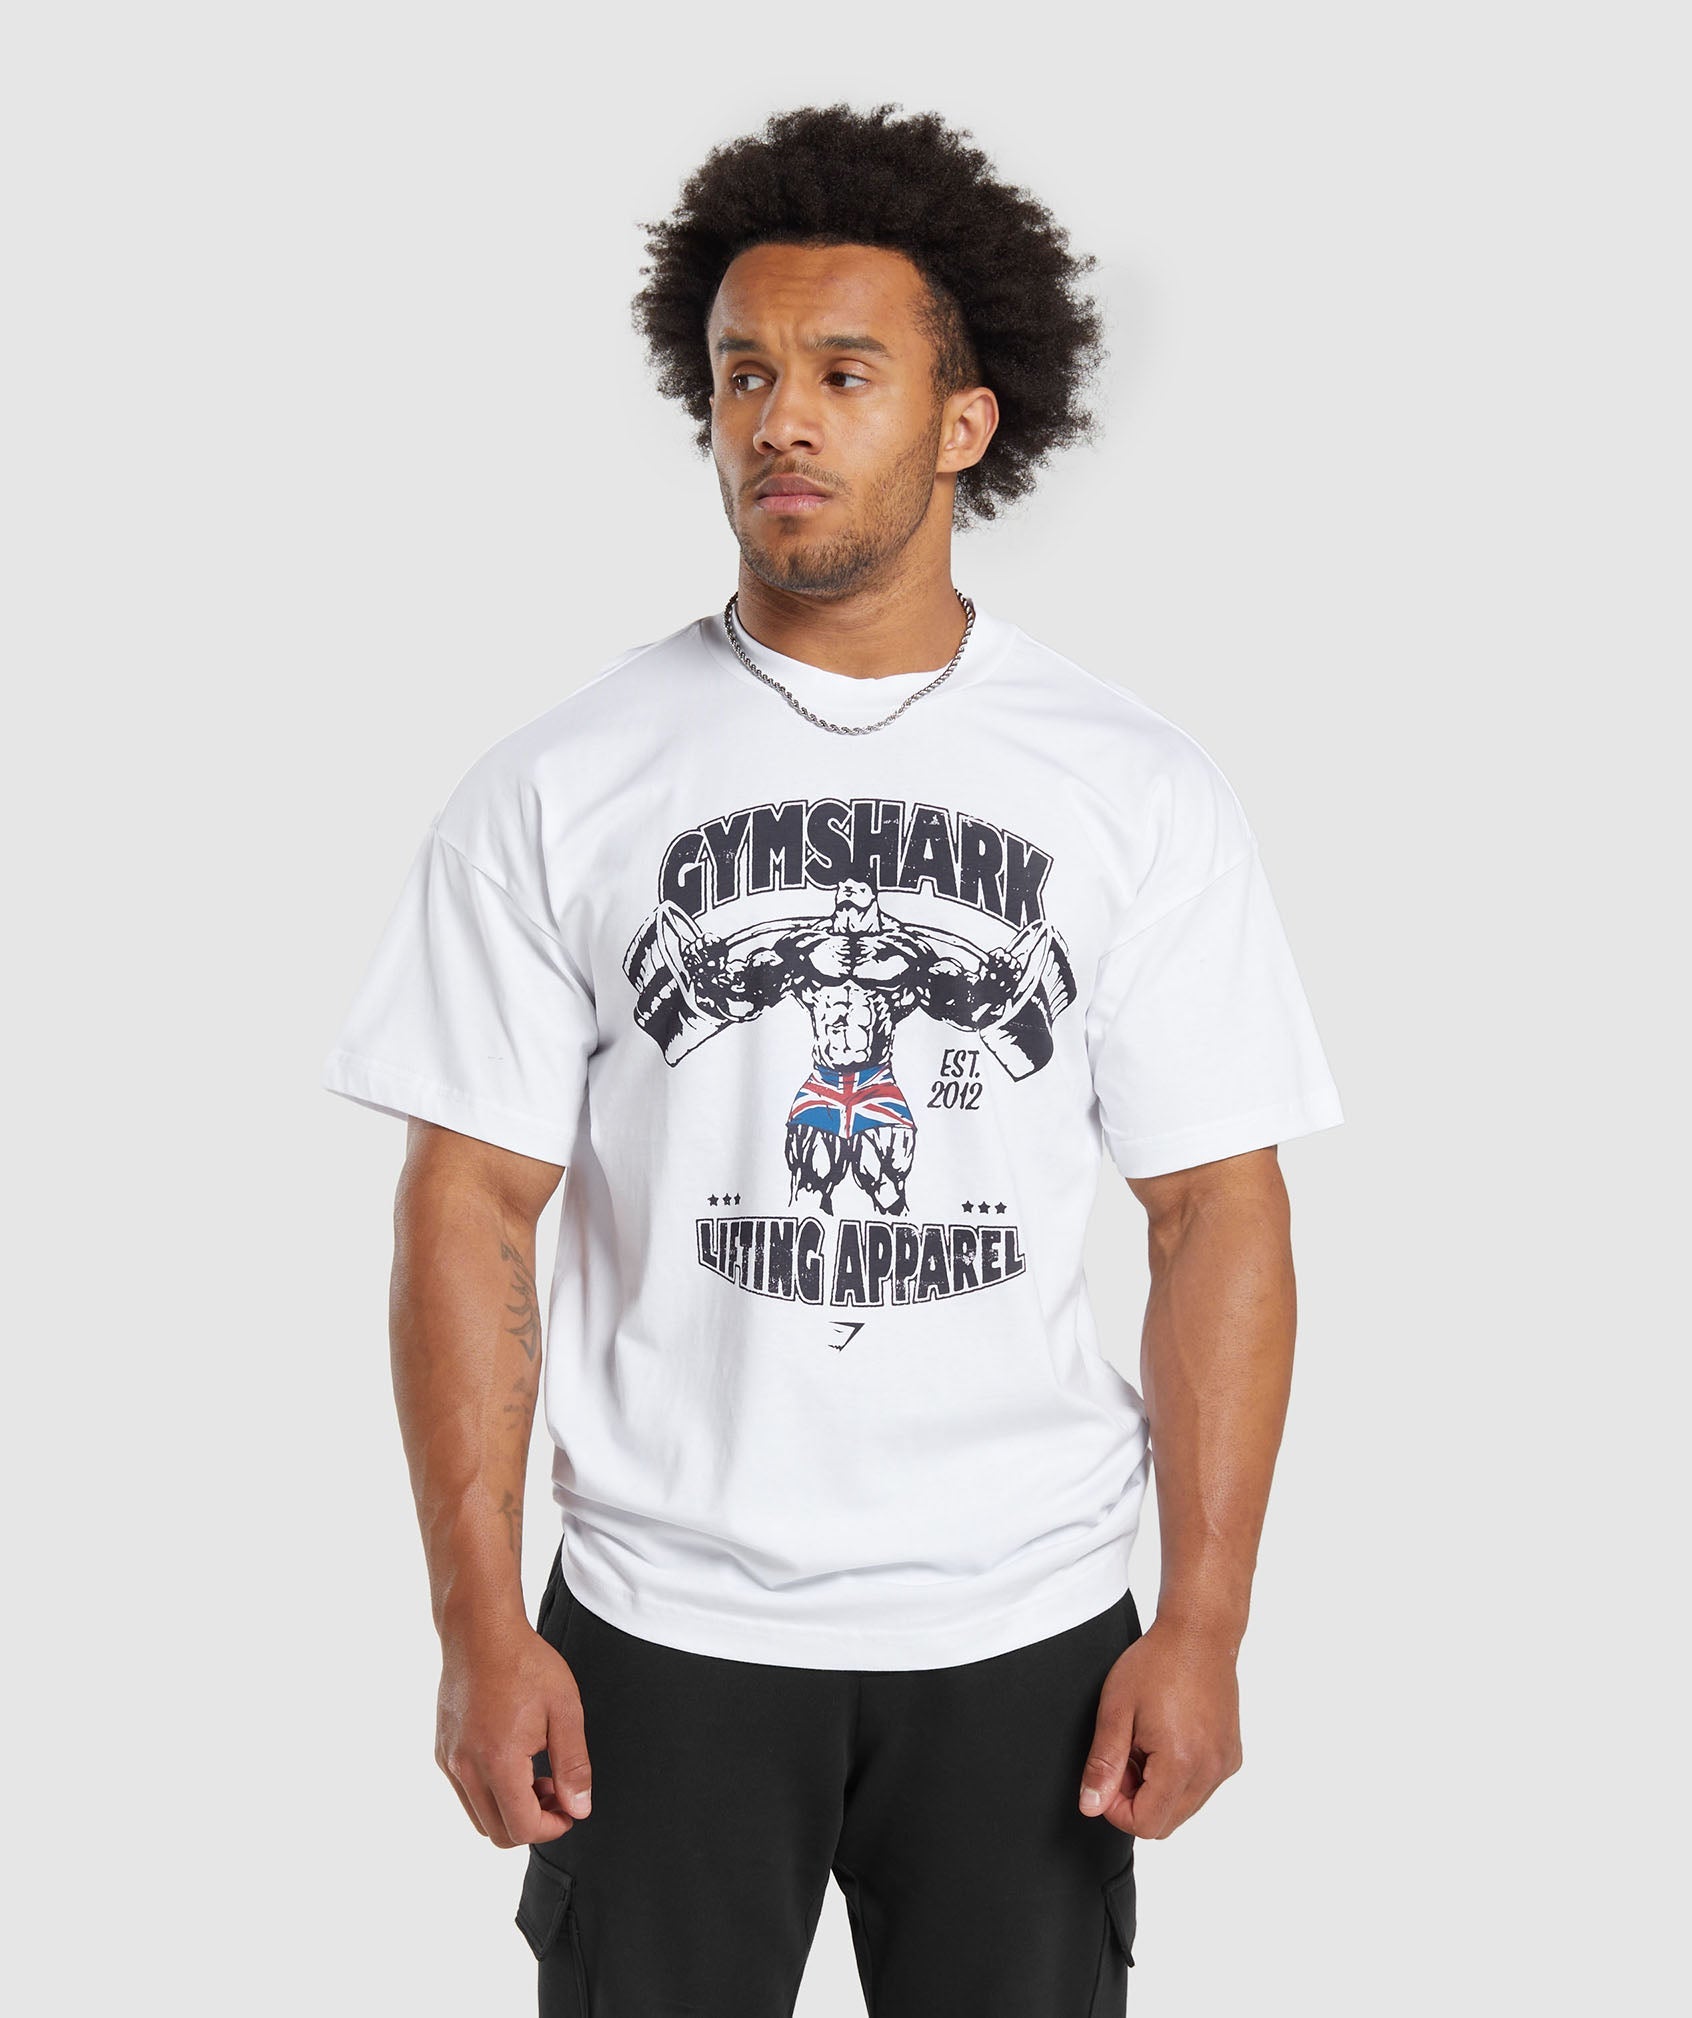 Gymshark Lifting Apparel T-Shirt - Black